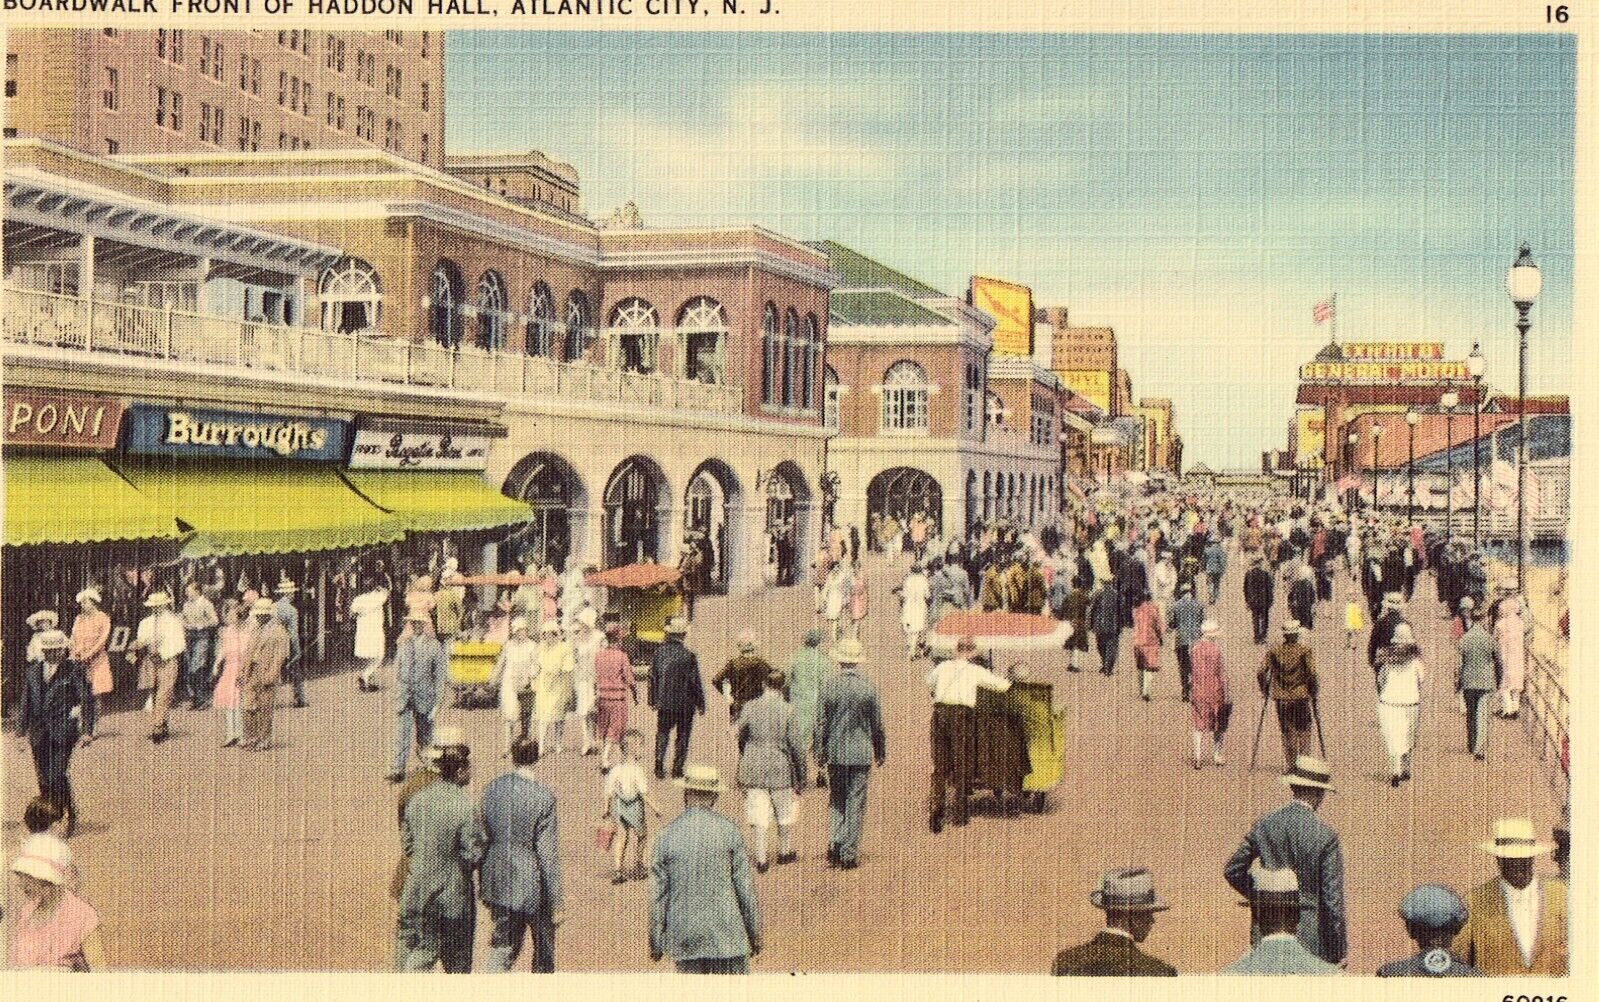 Boardwalk front of Haddon Hall - Atlantic City, New Jersey Linen Postcard